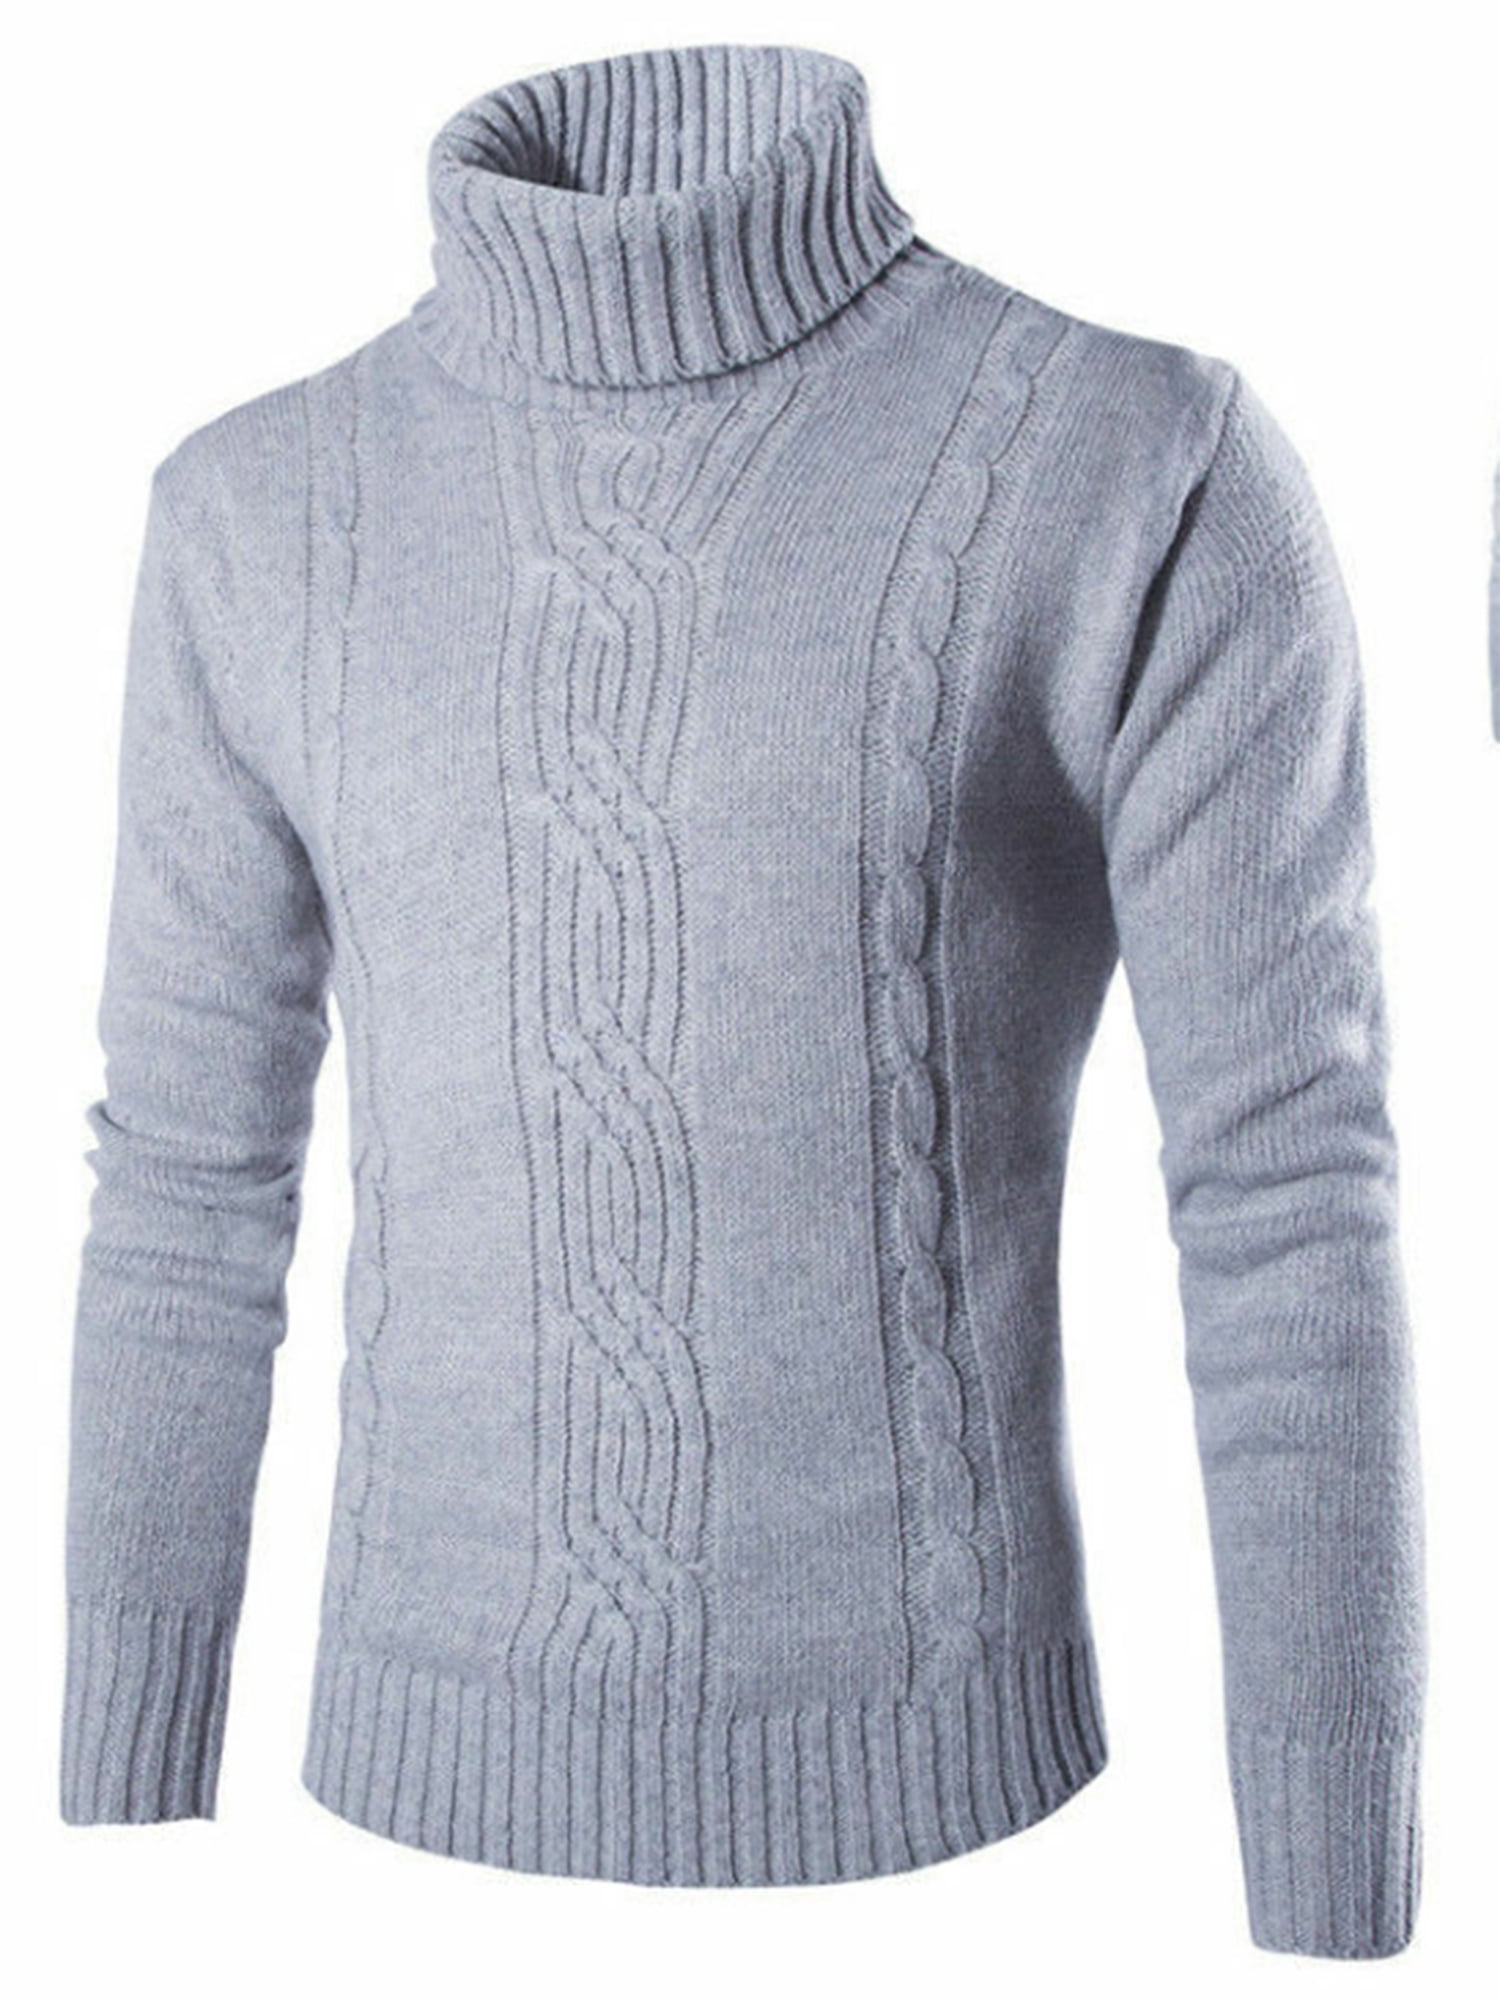 Men's Winter Warm Sweater Slim Fit Knitted High Neck Pullover Jumper Turtleneck 